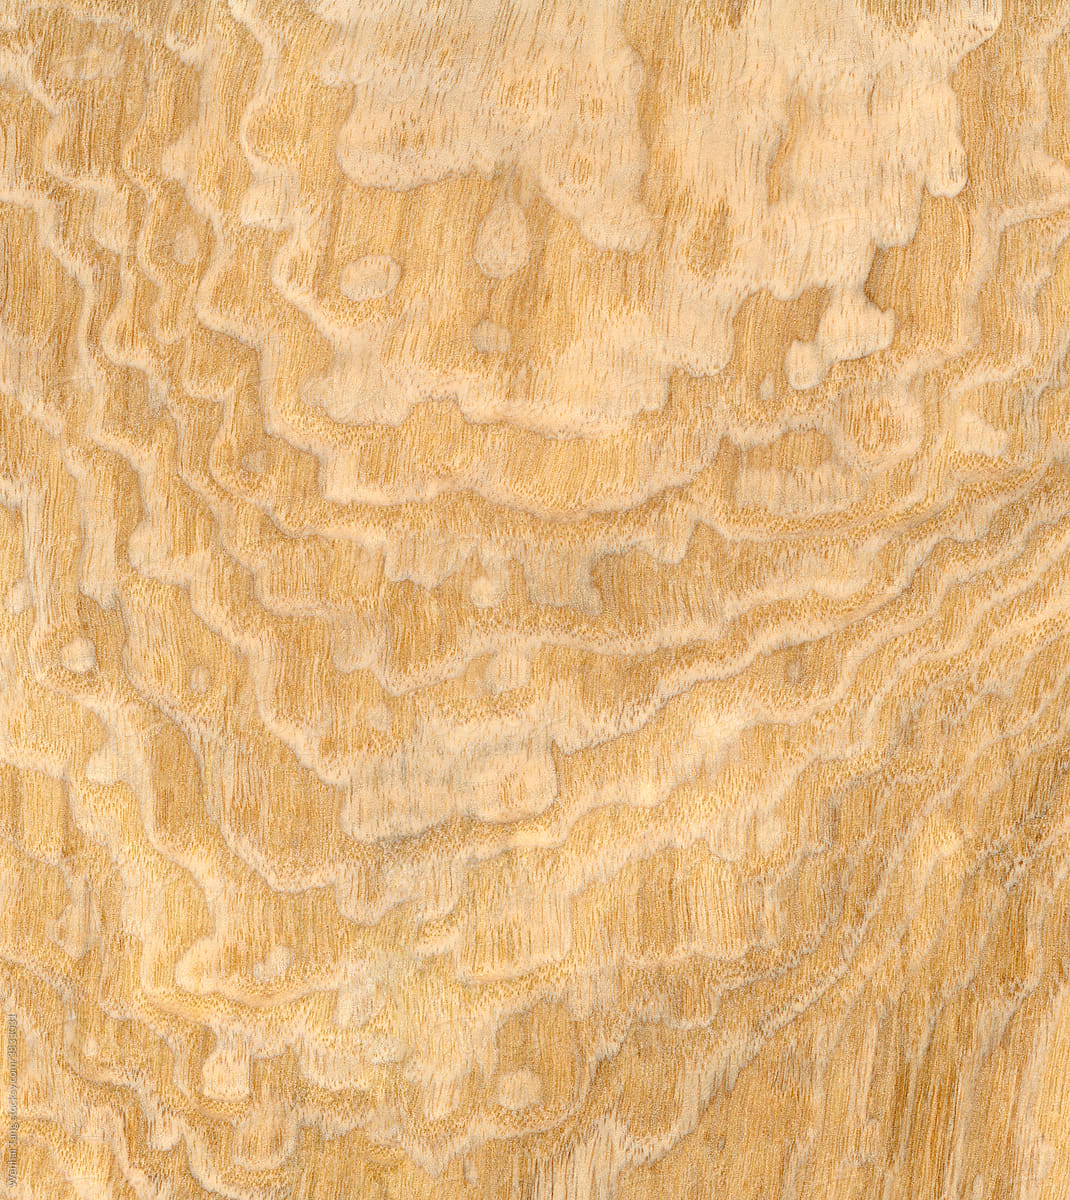 Macro photo of wood cross section Wood grain texture background